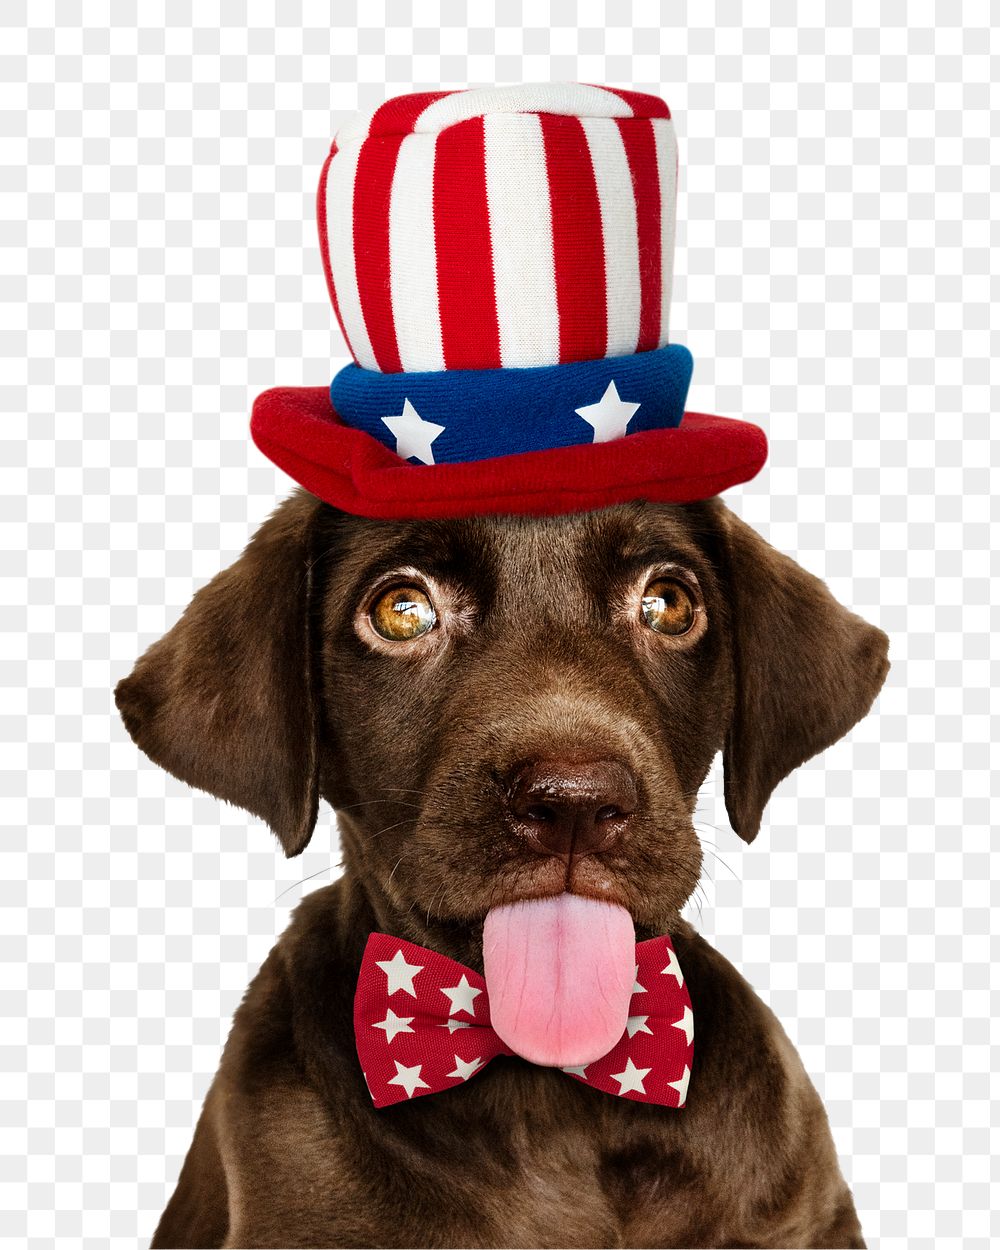 Uncle Sam png puppy sticker, Labrador Retriever collage element on transparent background